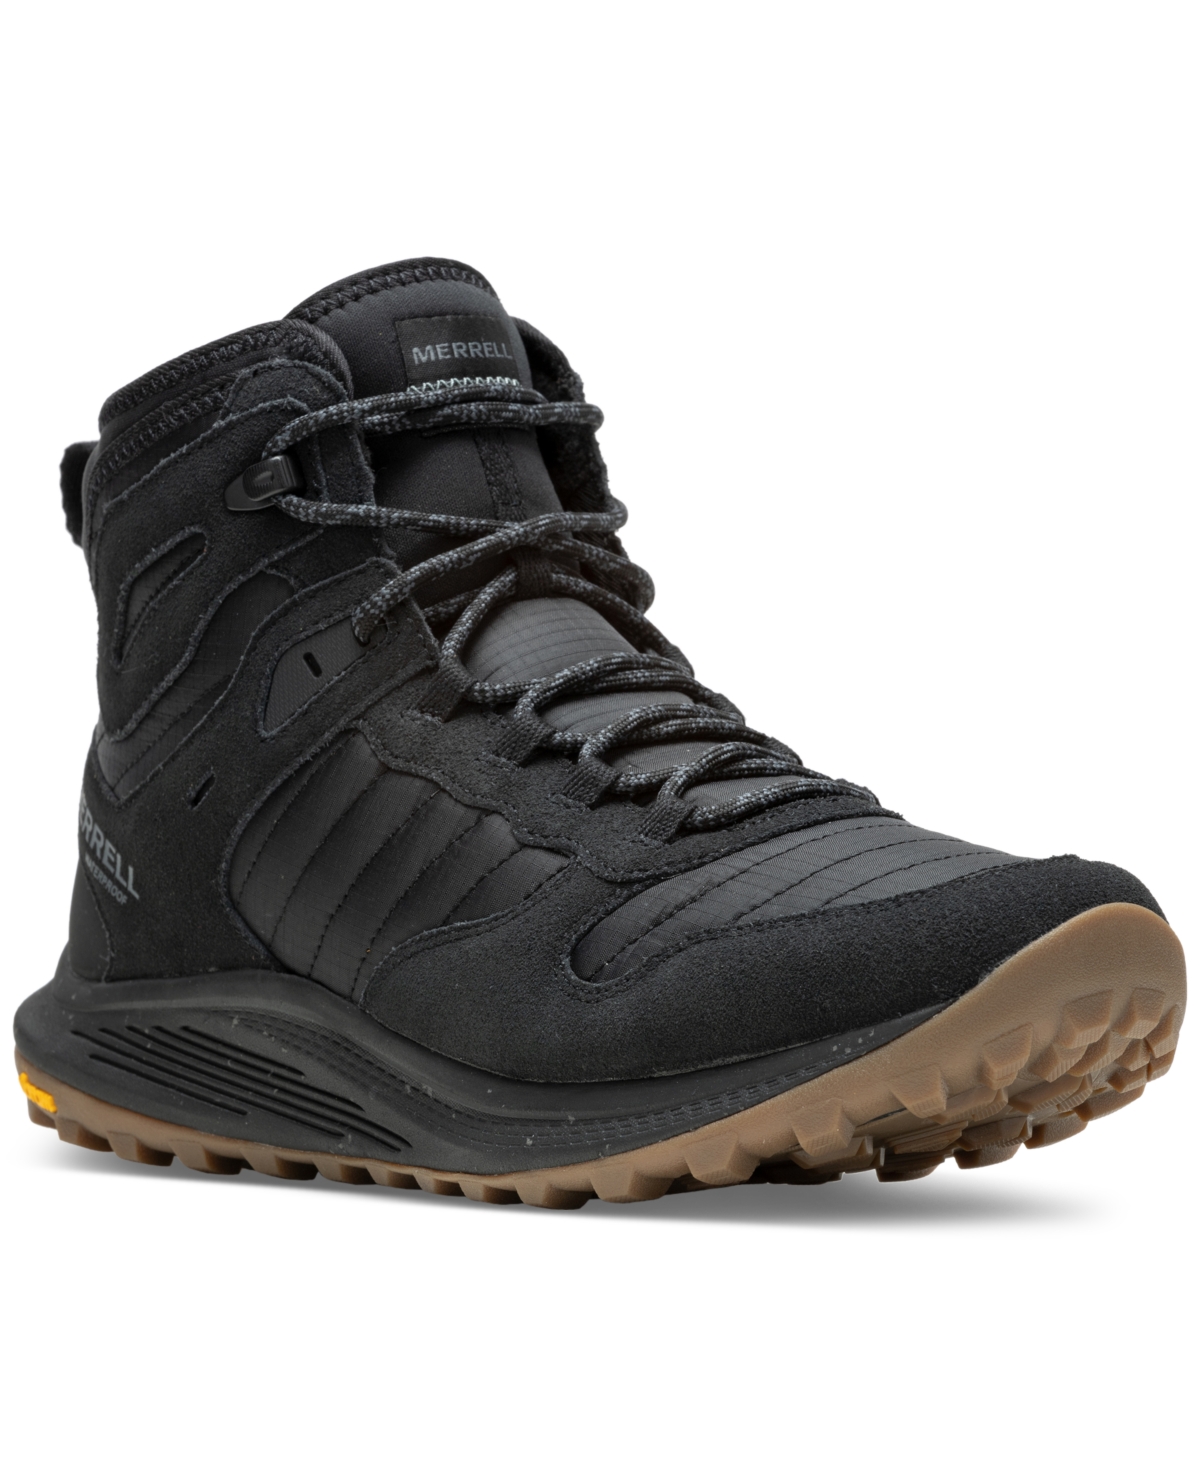 Men's Nova 3 Thermo Waterproof Hiking Boots - Black